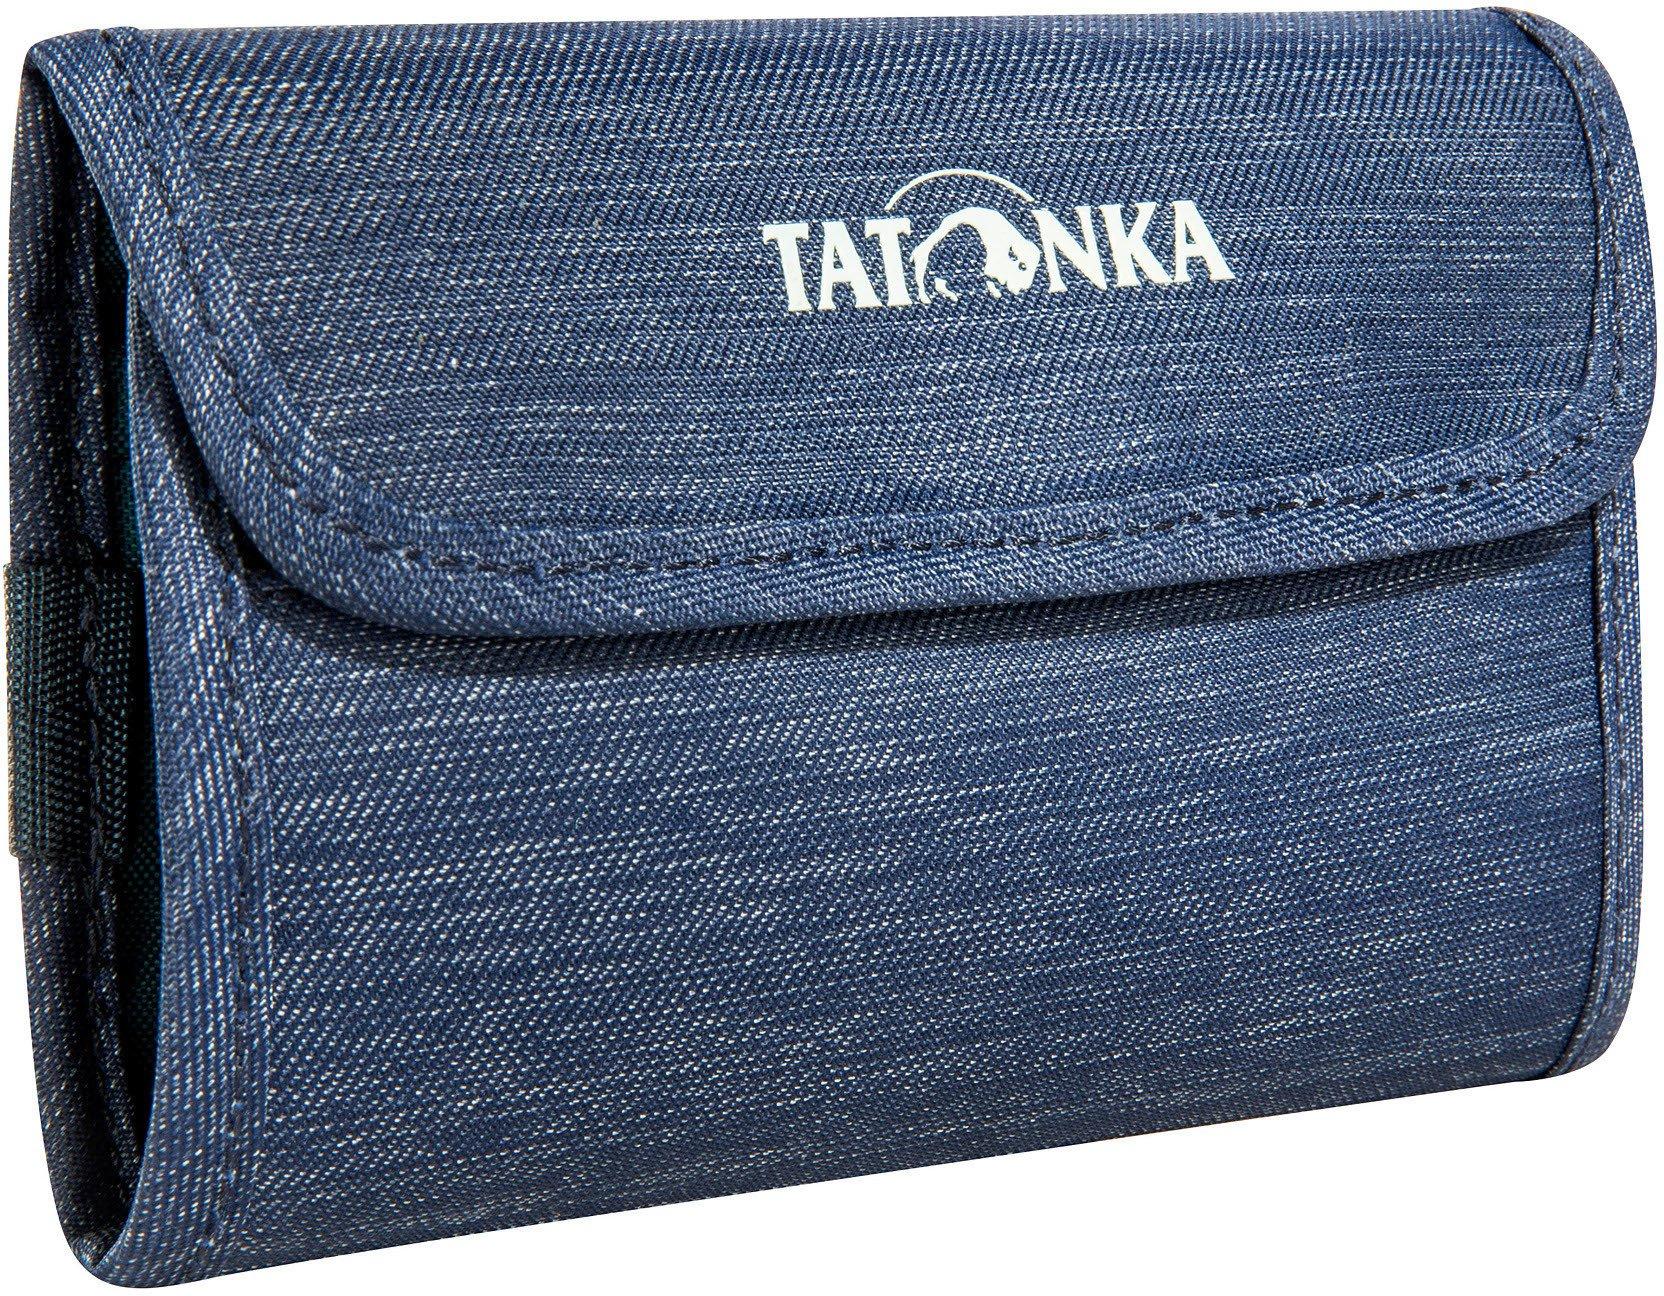 Tatonka Money Box